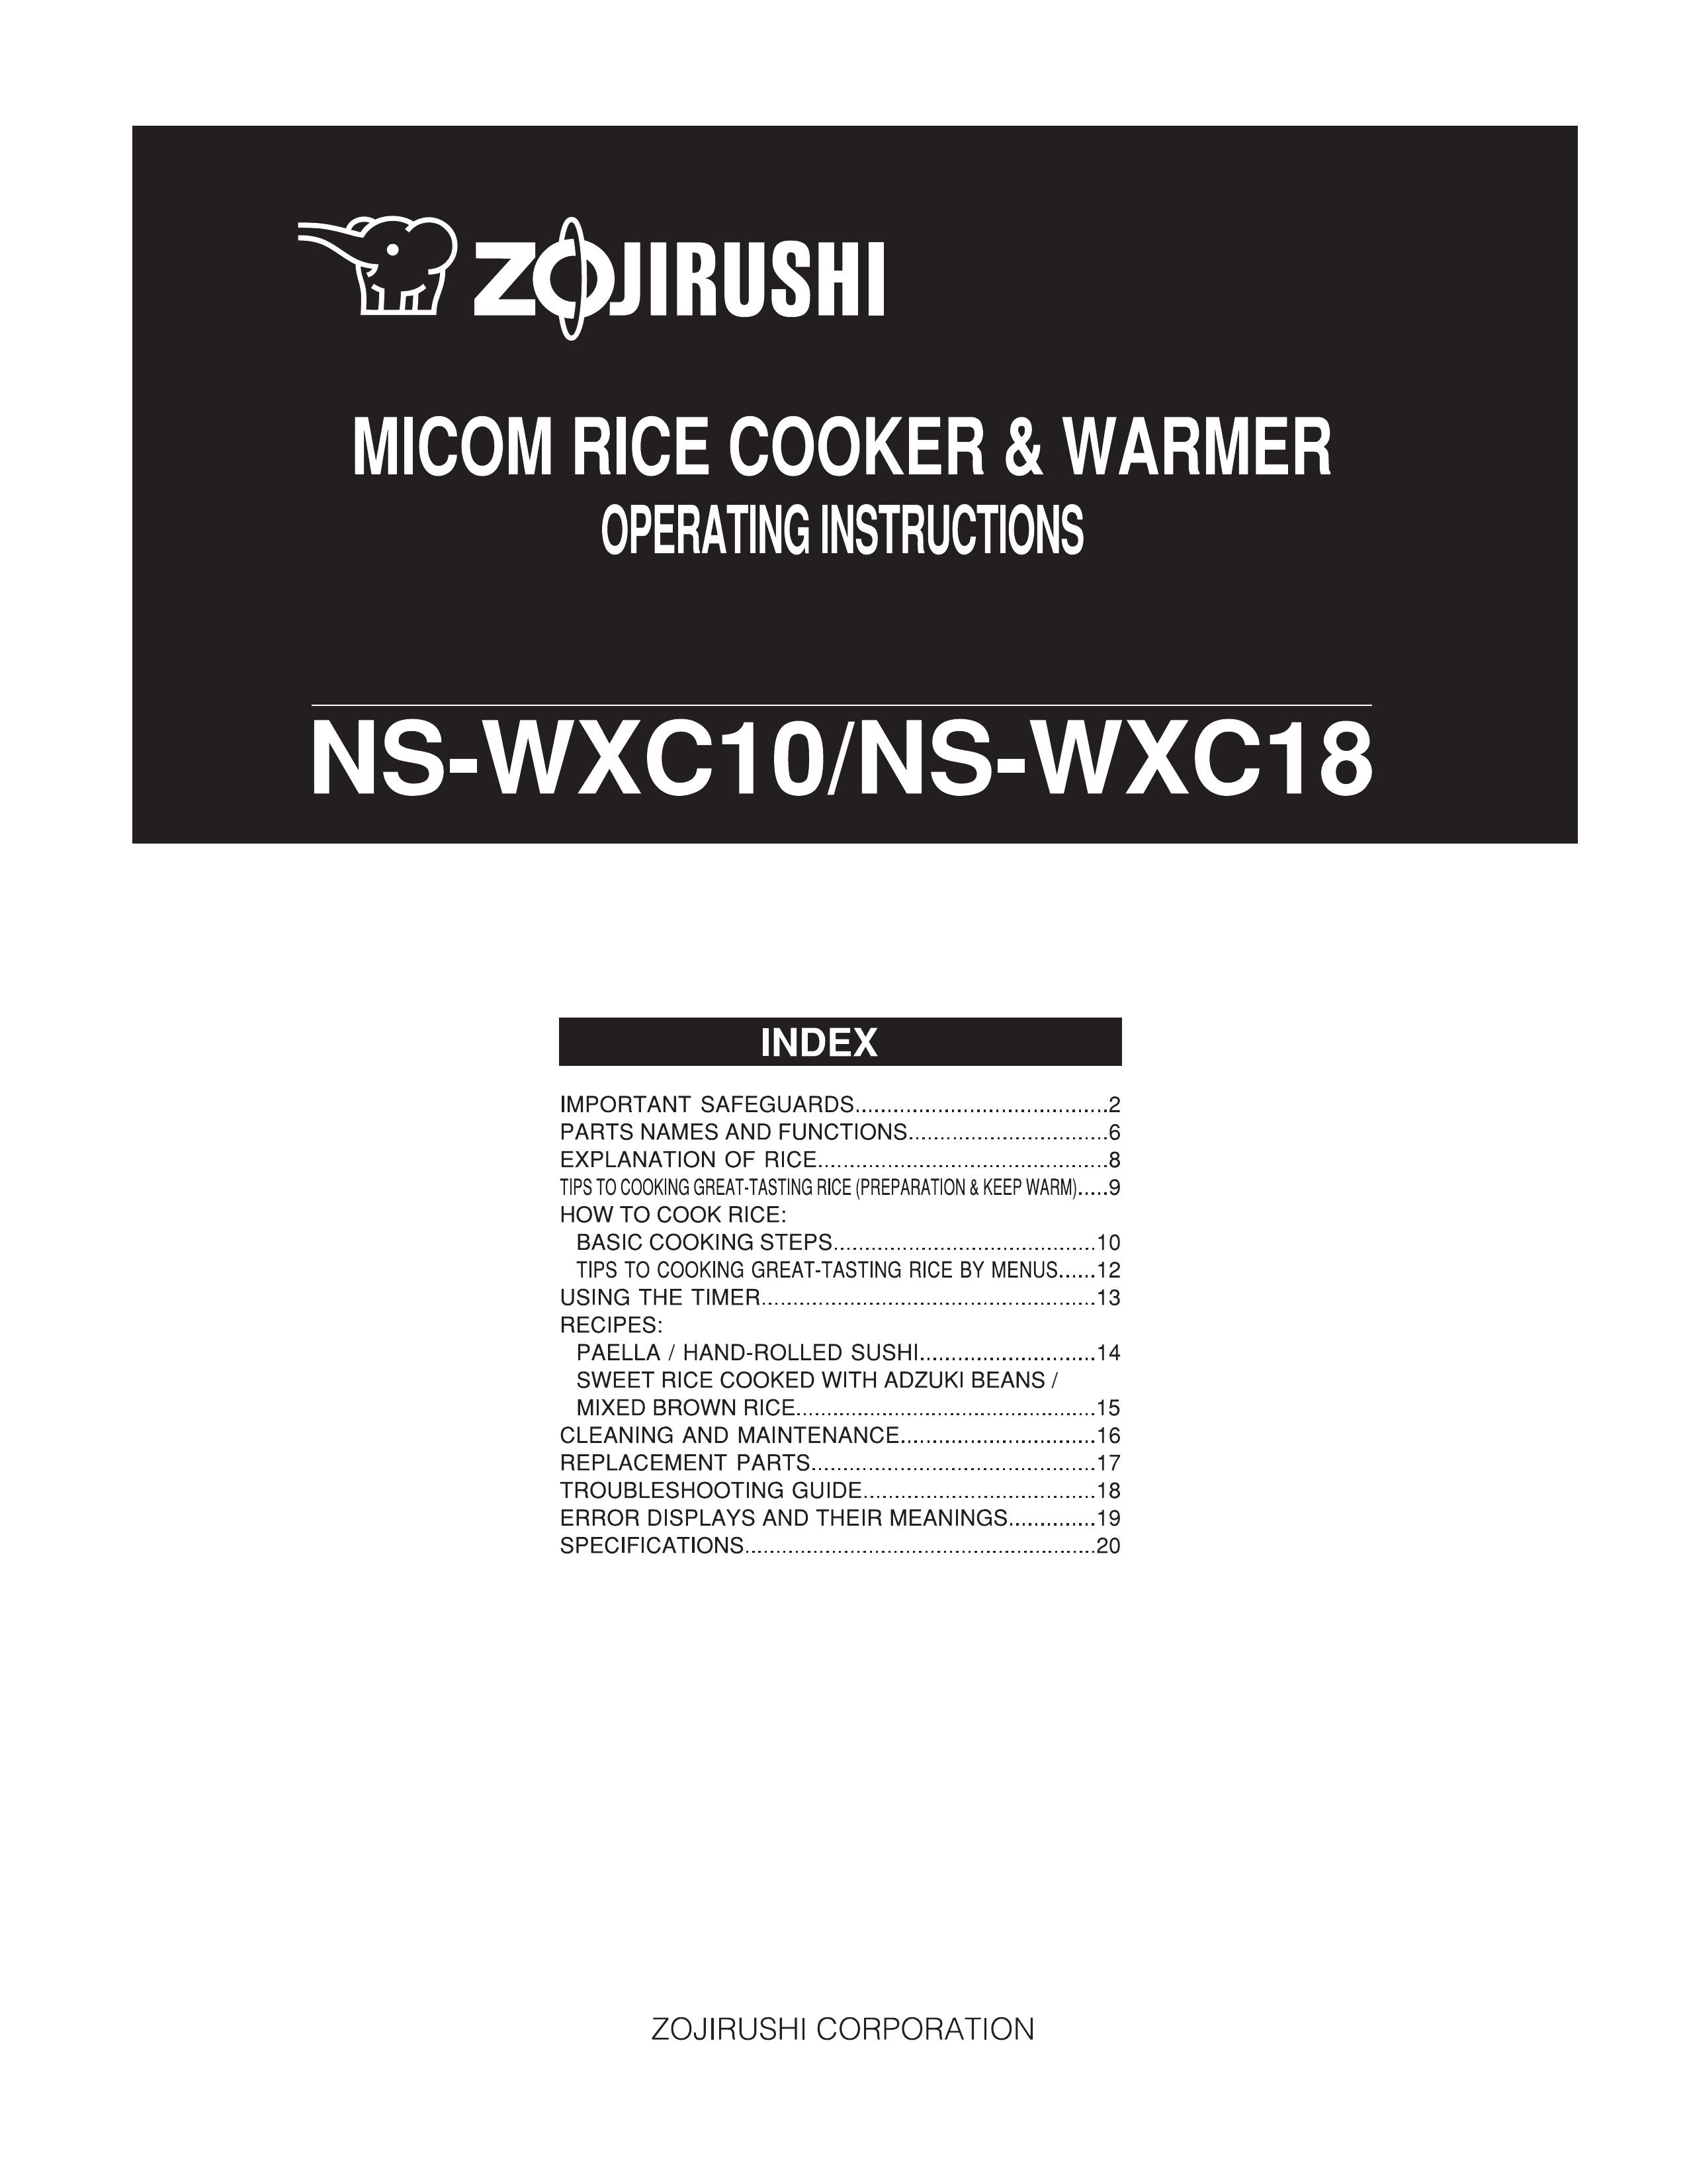 Zojirushi NS-WXC18 Rice Cooker User Manual